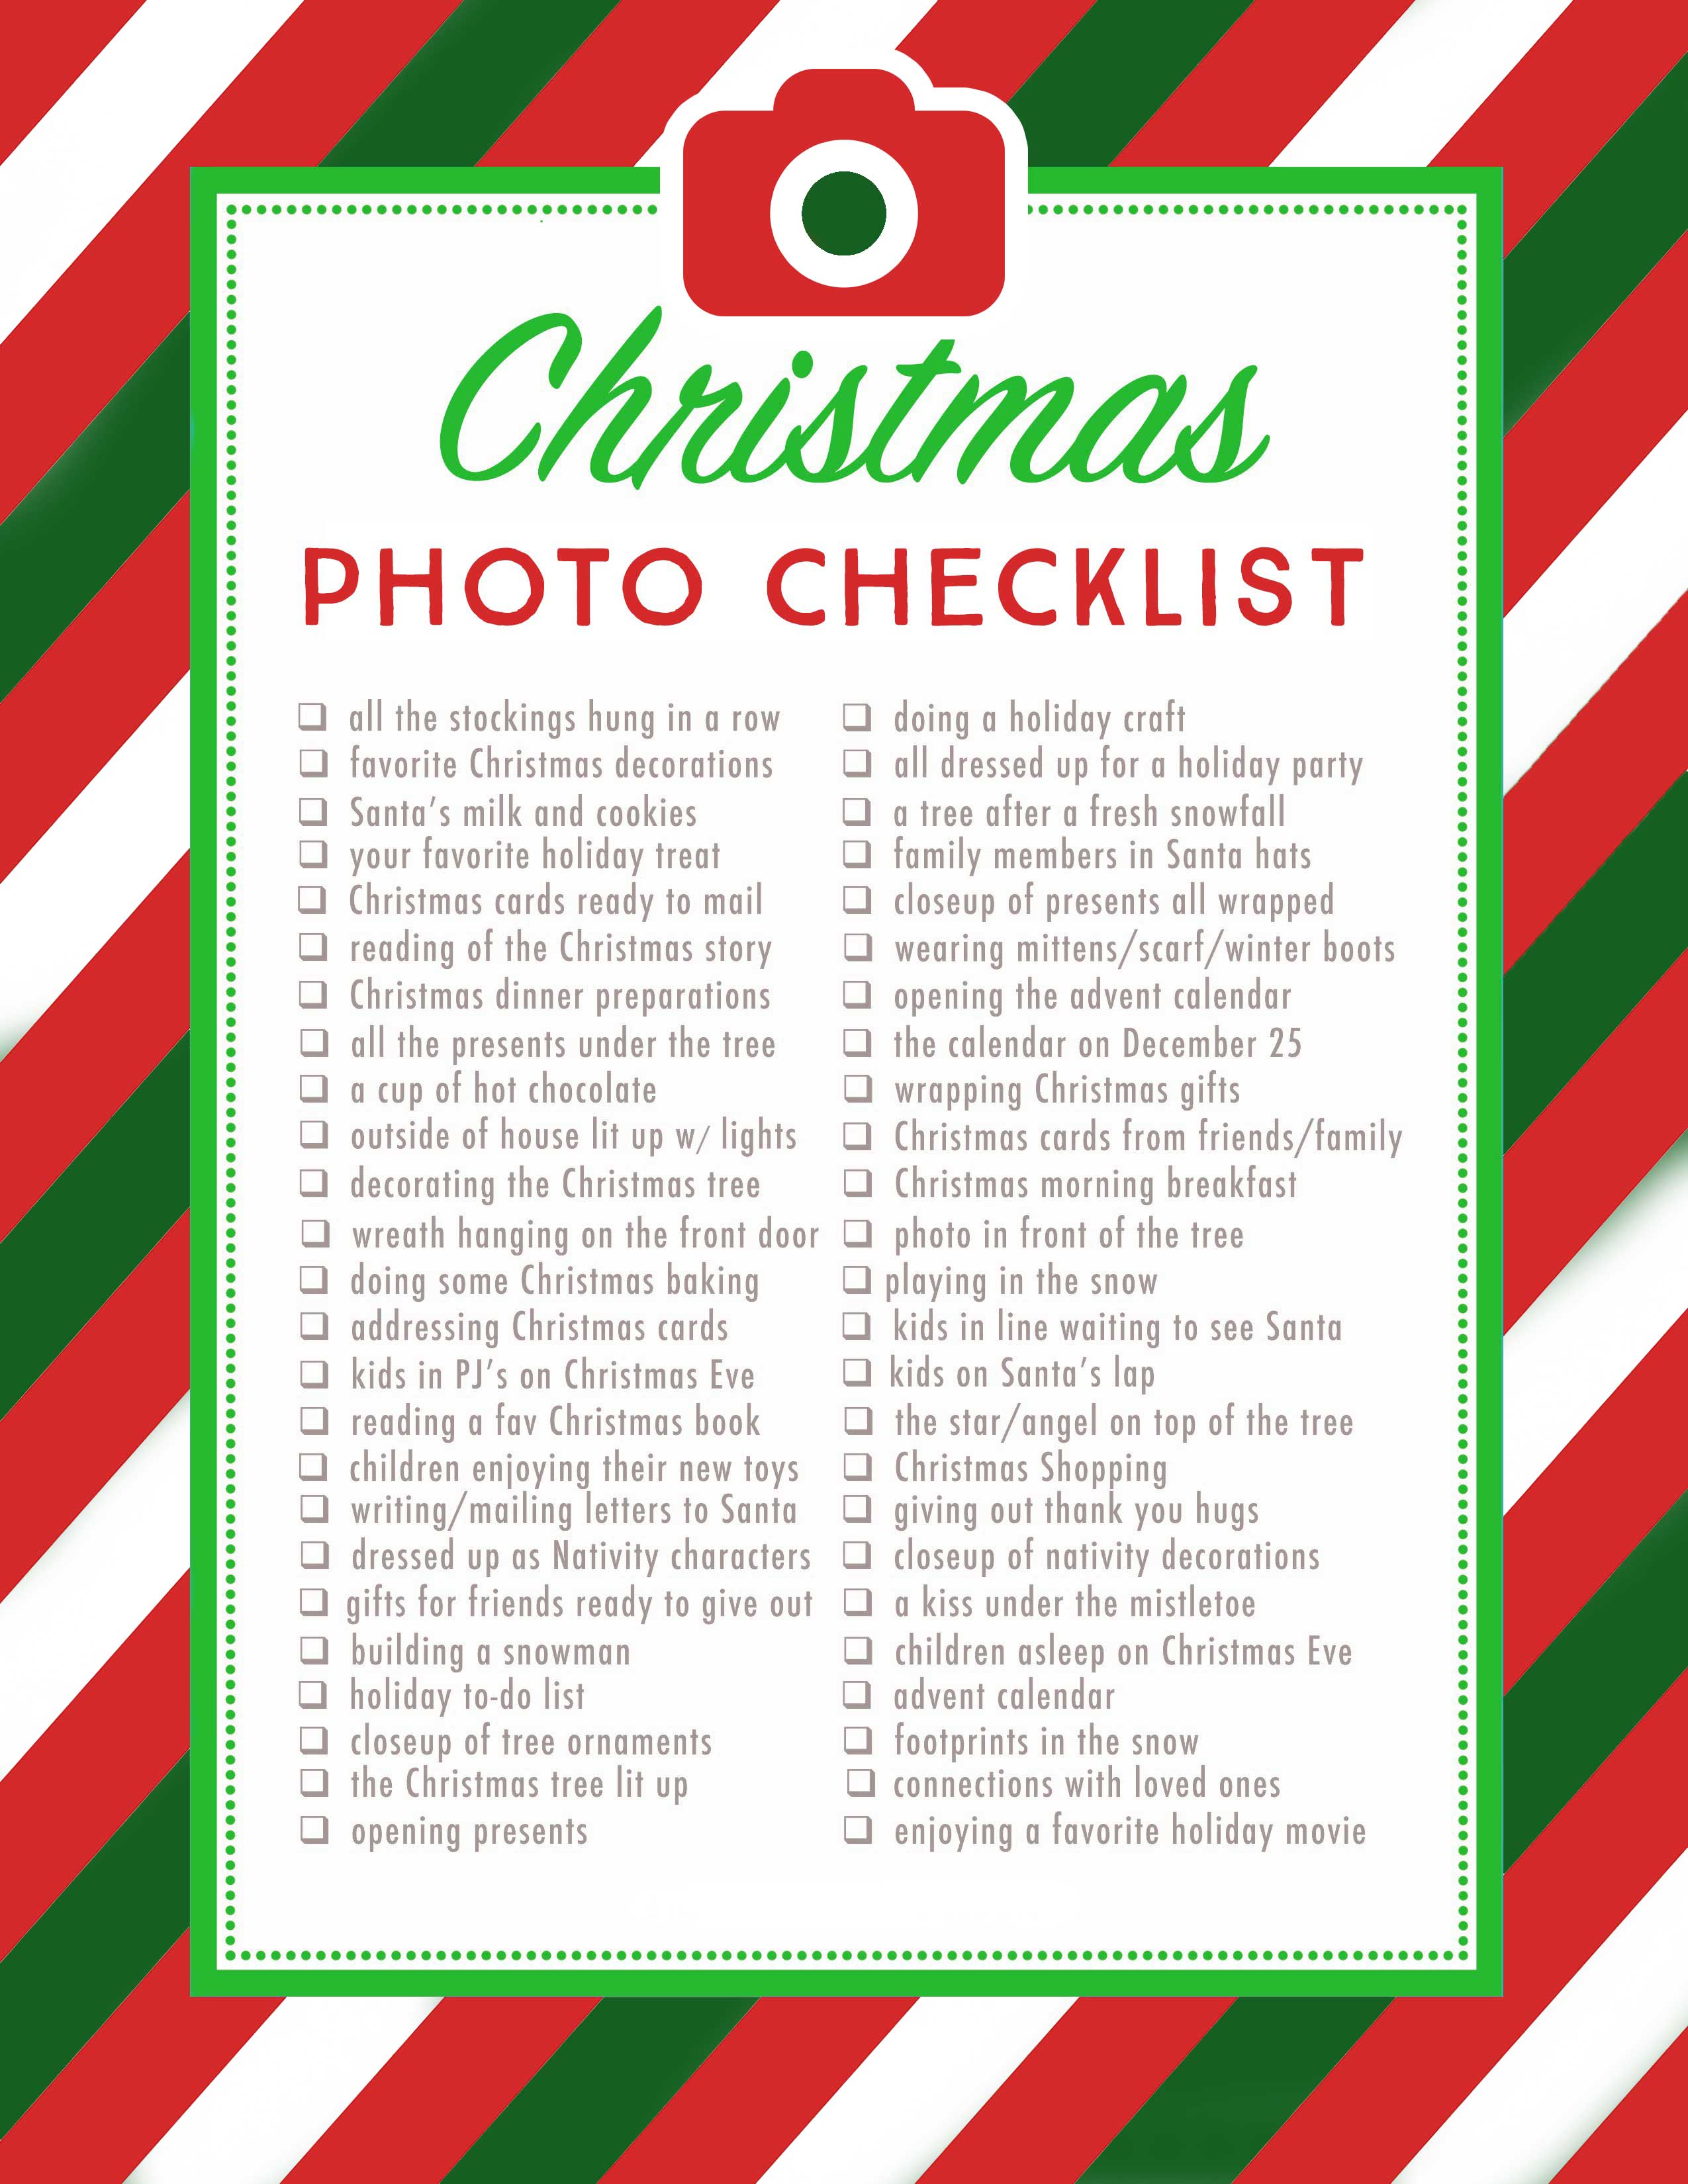 how-to-take-nice-Christmas-photo-checklist-ideas-print-ready